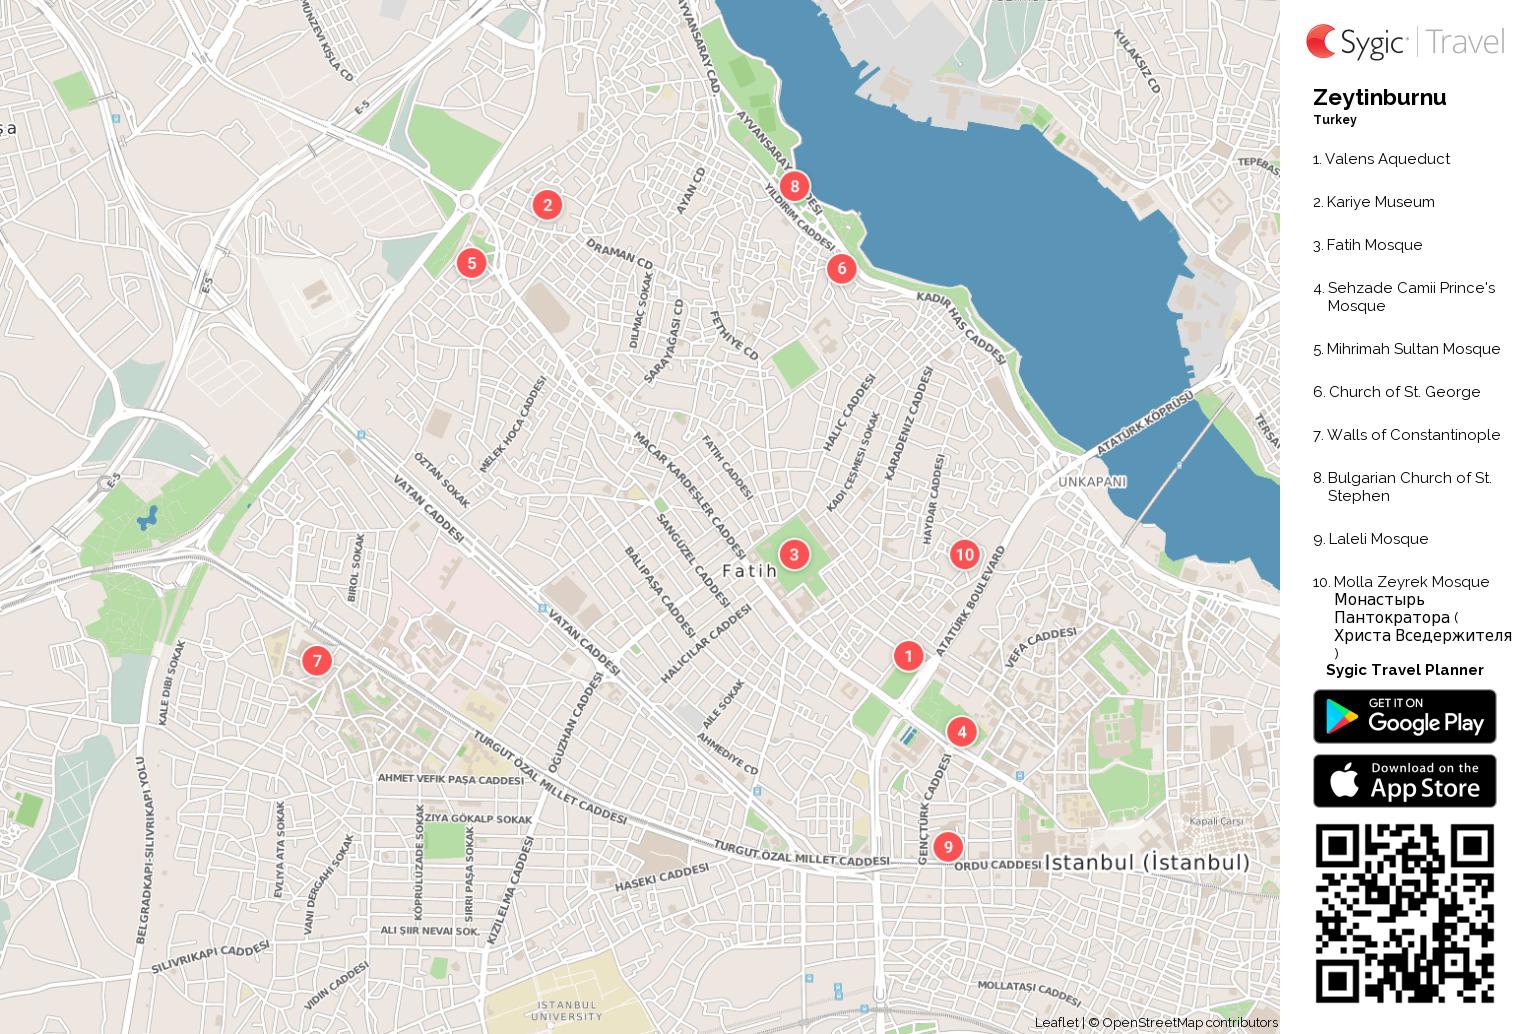 zeytinburnu printable tourist map